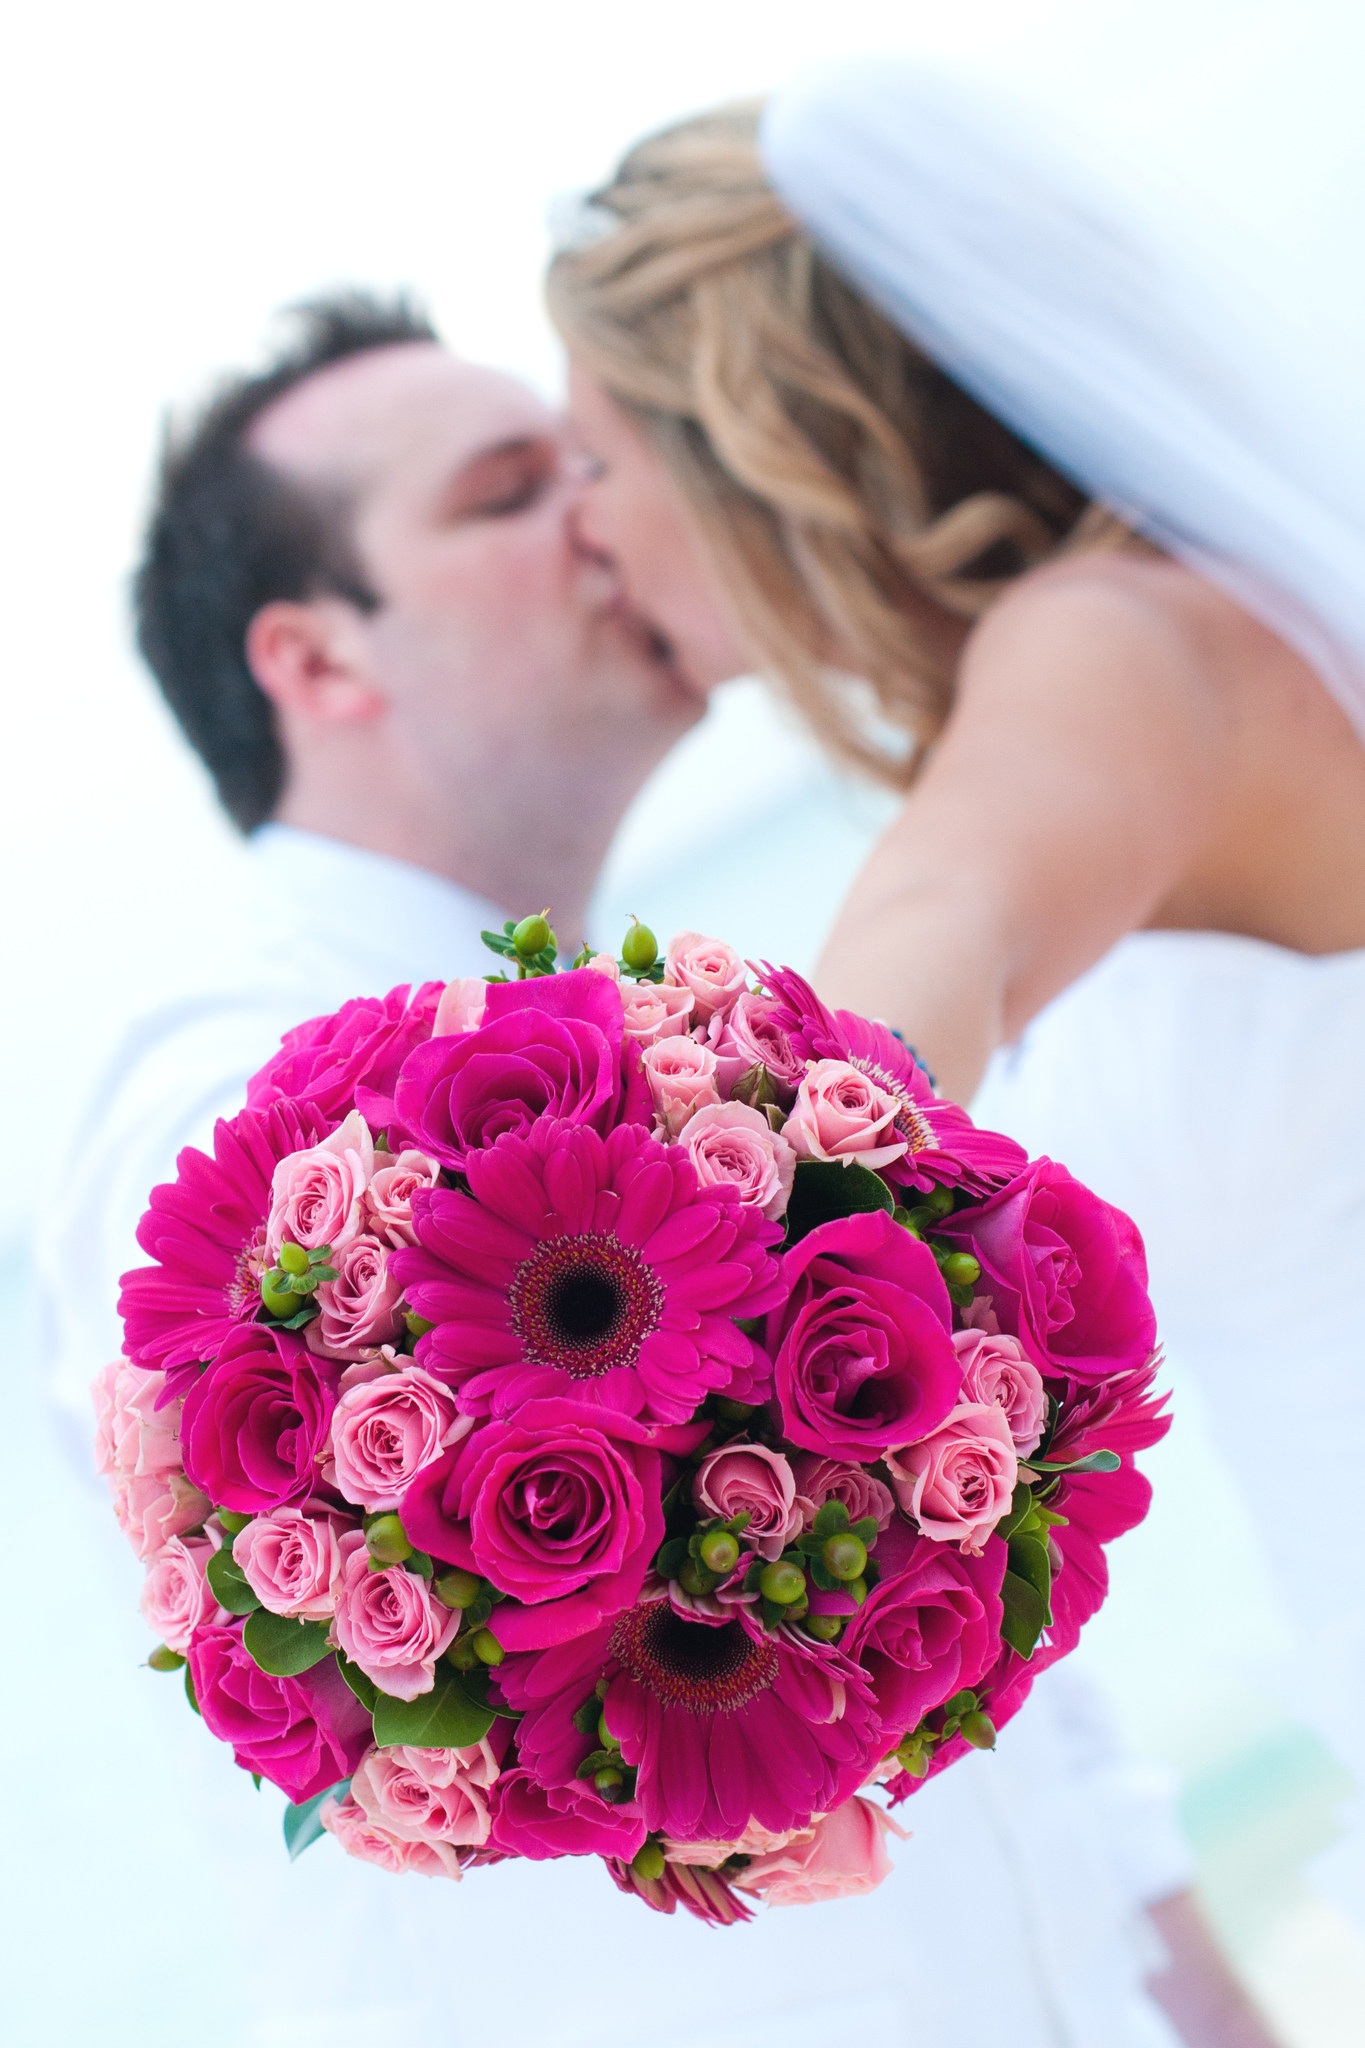 Wedding-bouquet-pinks-with-green-berries.jpg